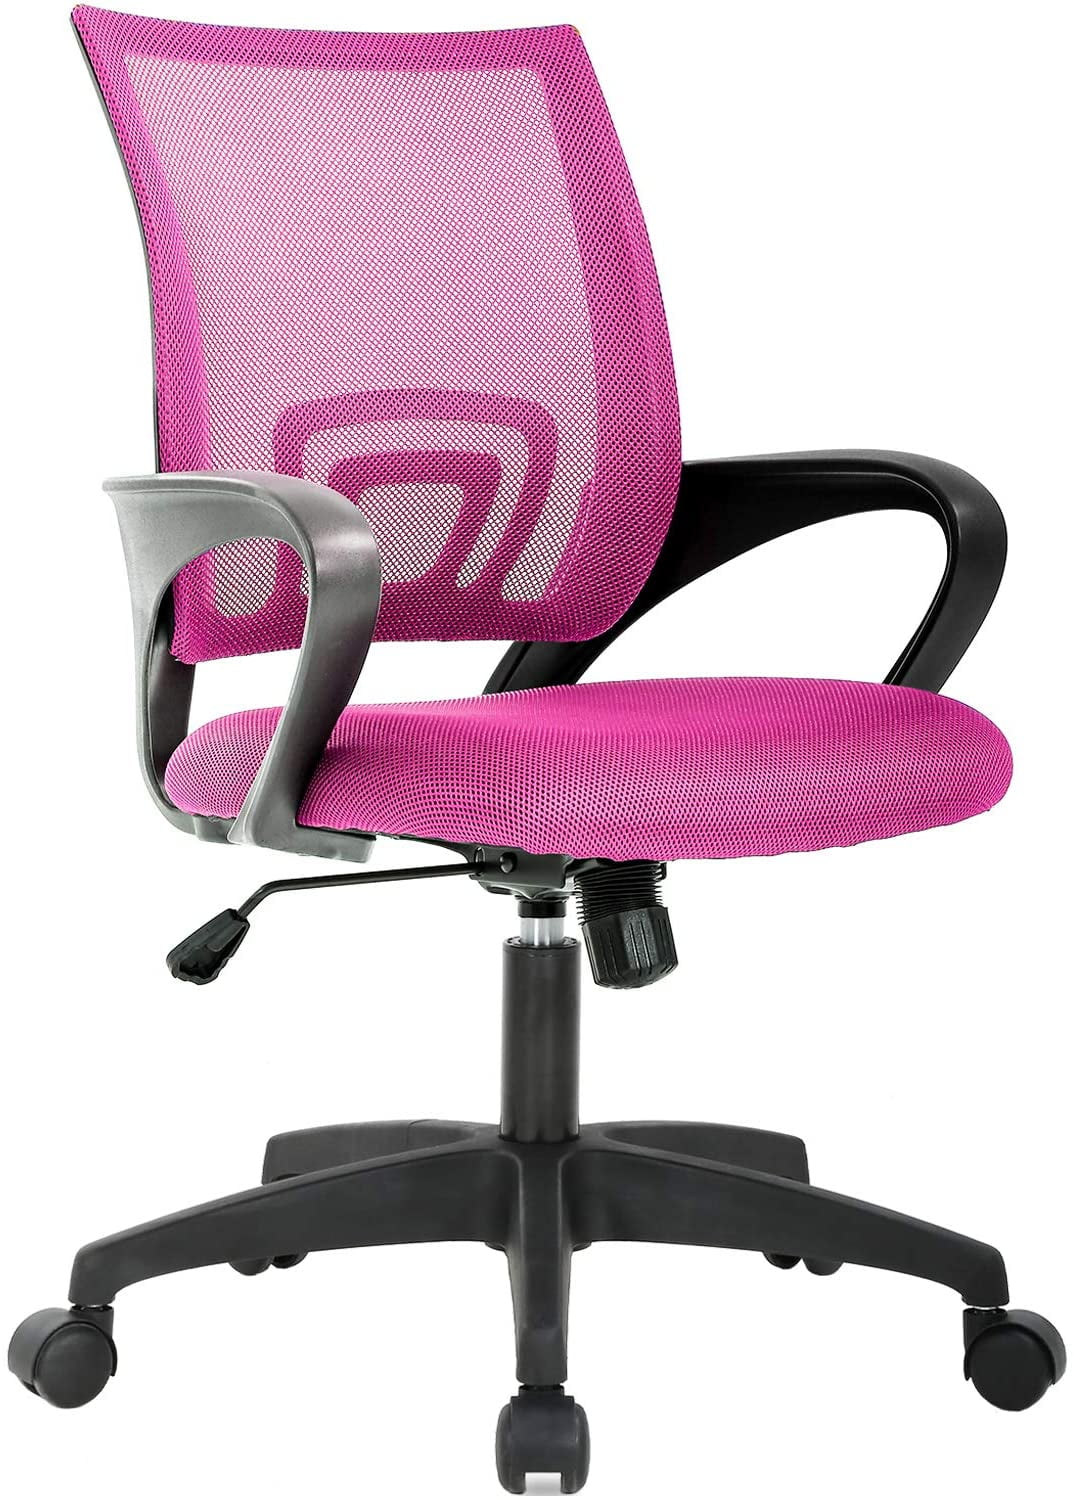 Office Chair Ergonomic Desk Chair Mesh Computer Chair with Lumbar Support 